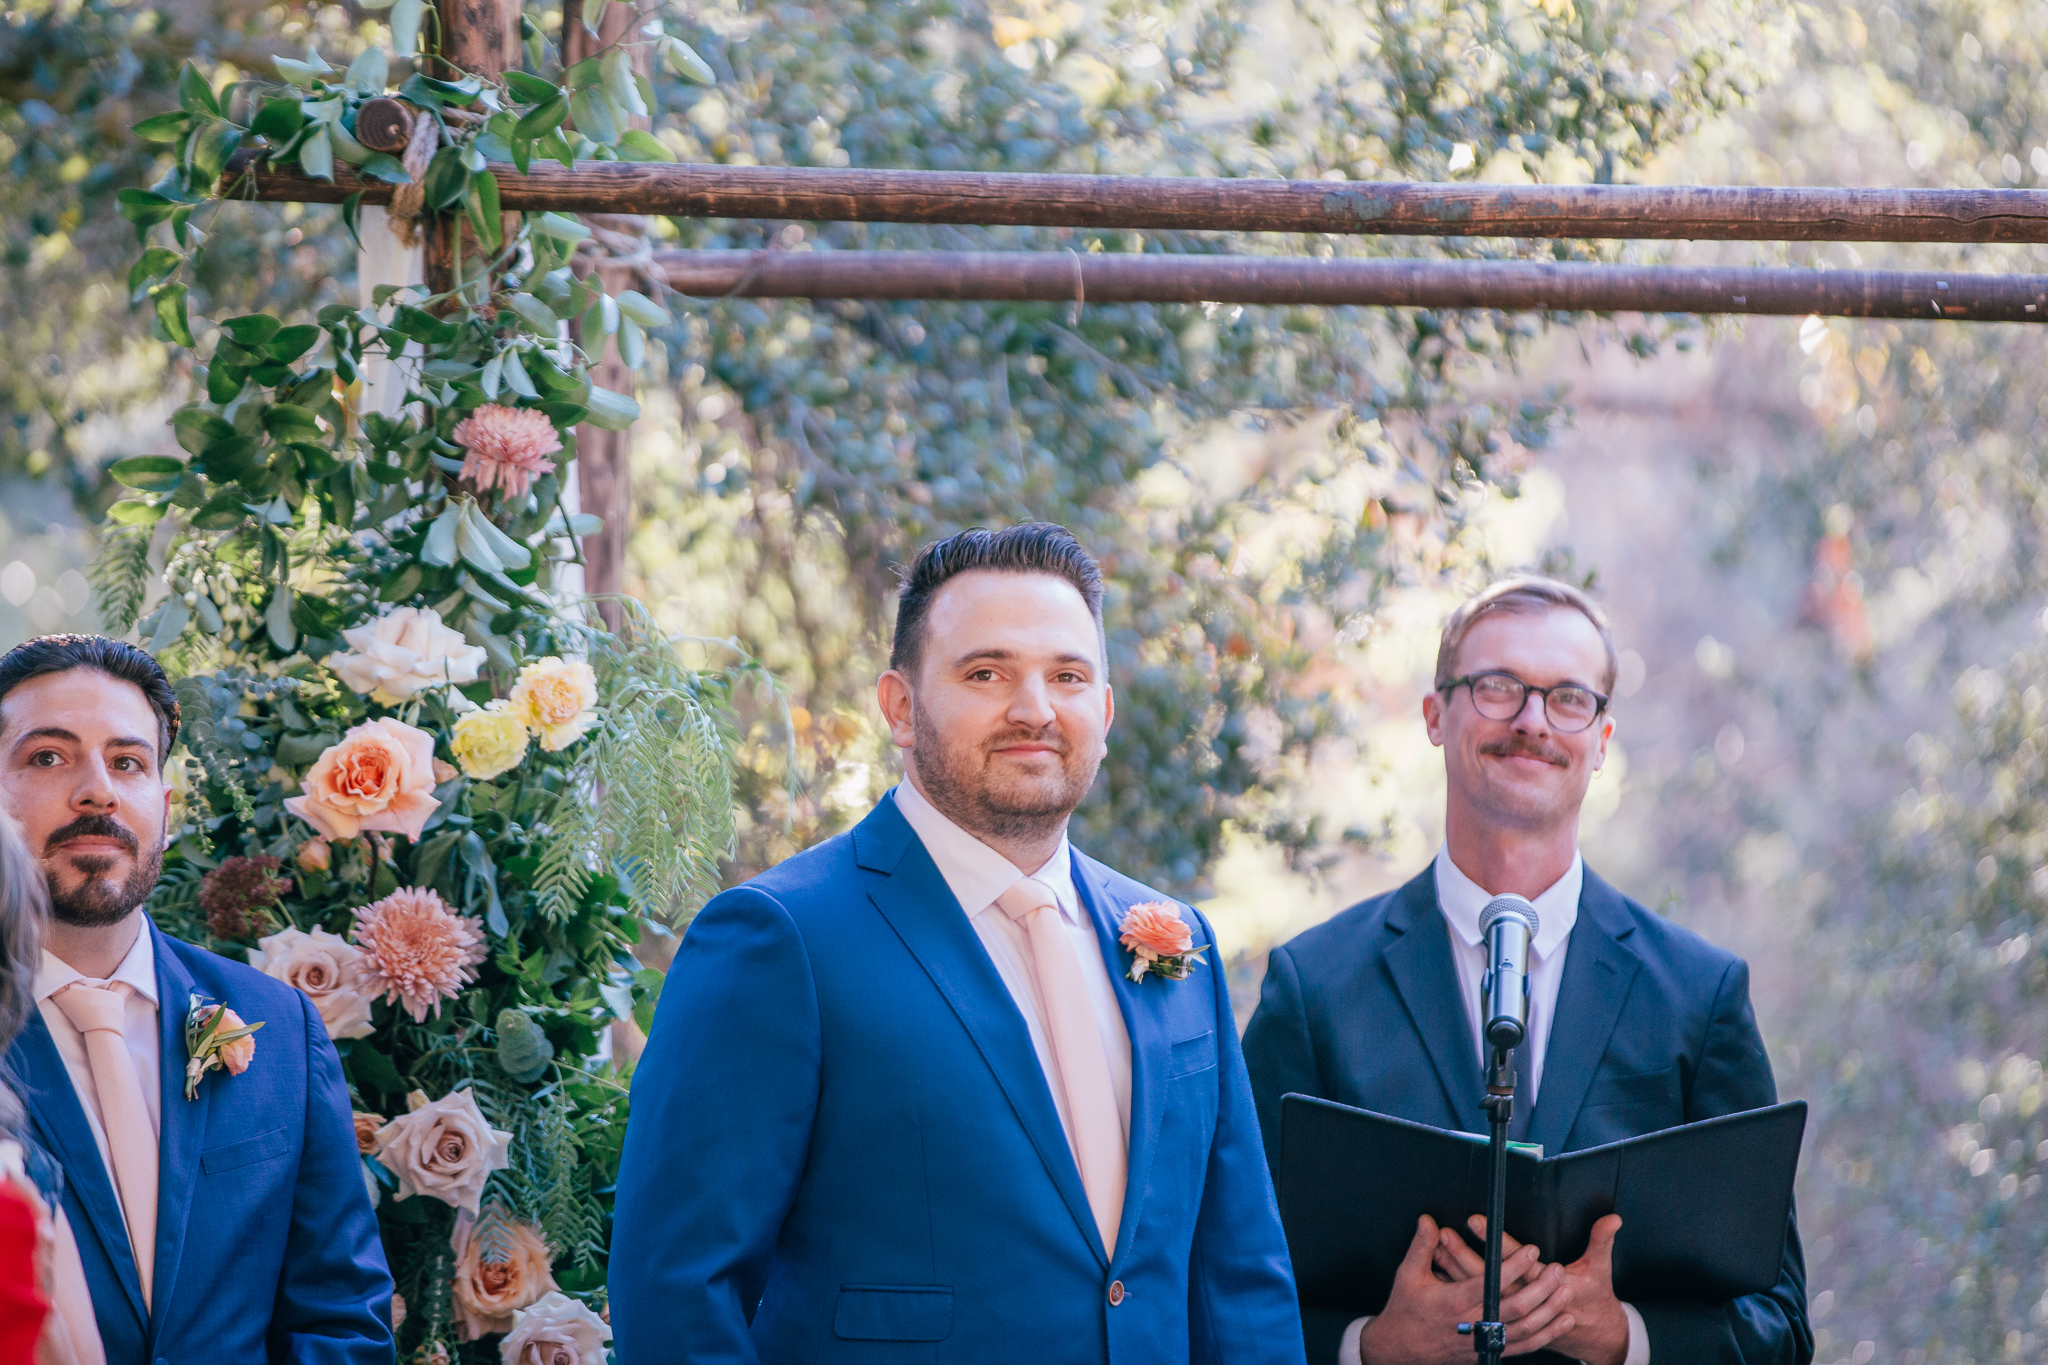 groom in blue suit and light pink tie sees bride walking down aisle